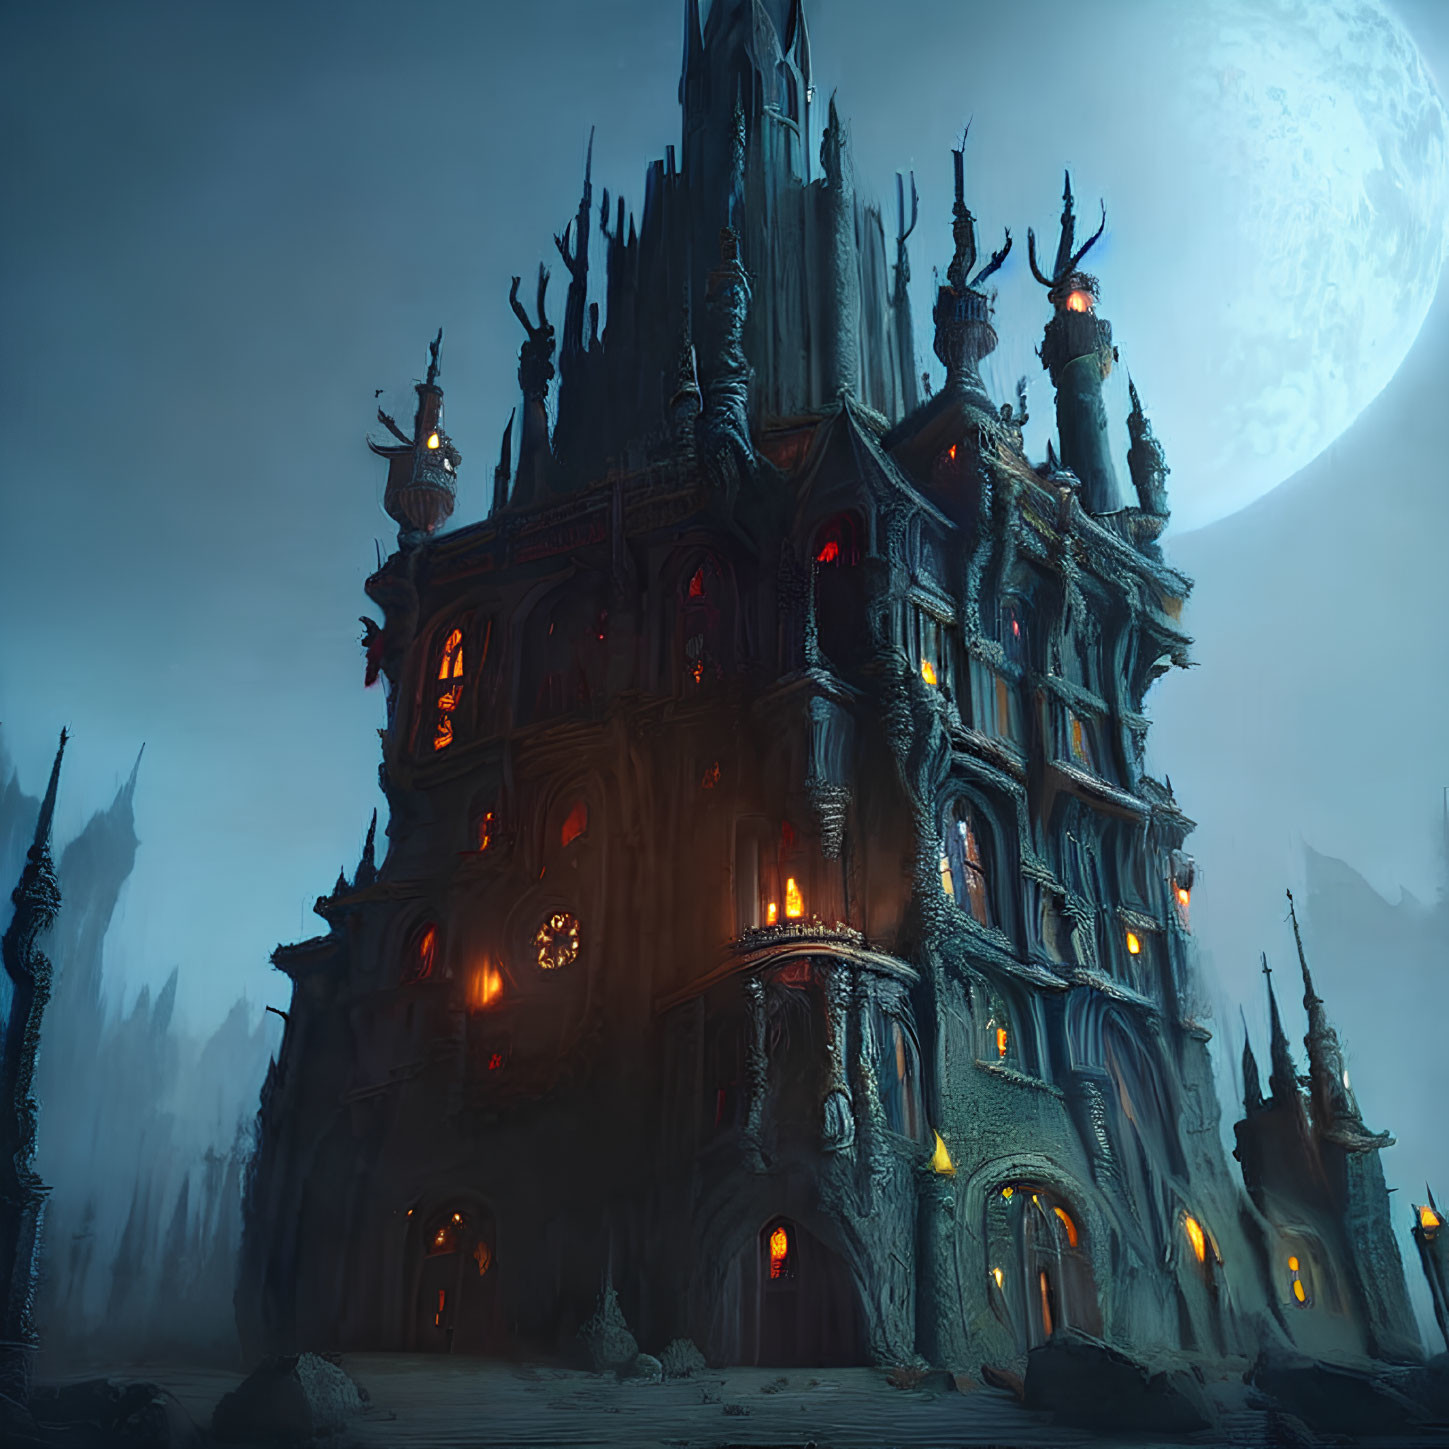 Gothic-style haunted house with luminous windows under full moon